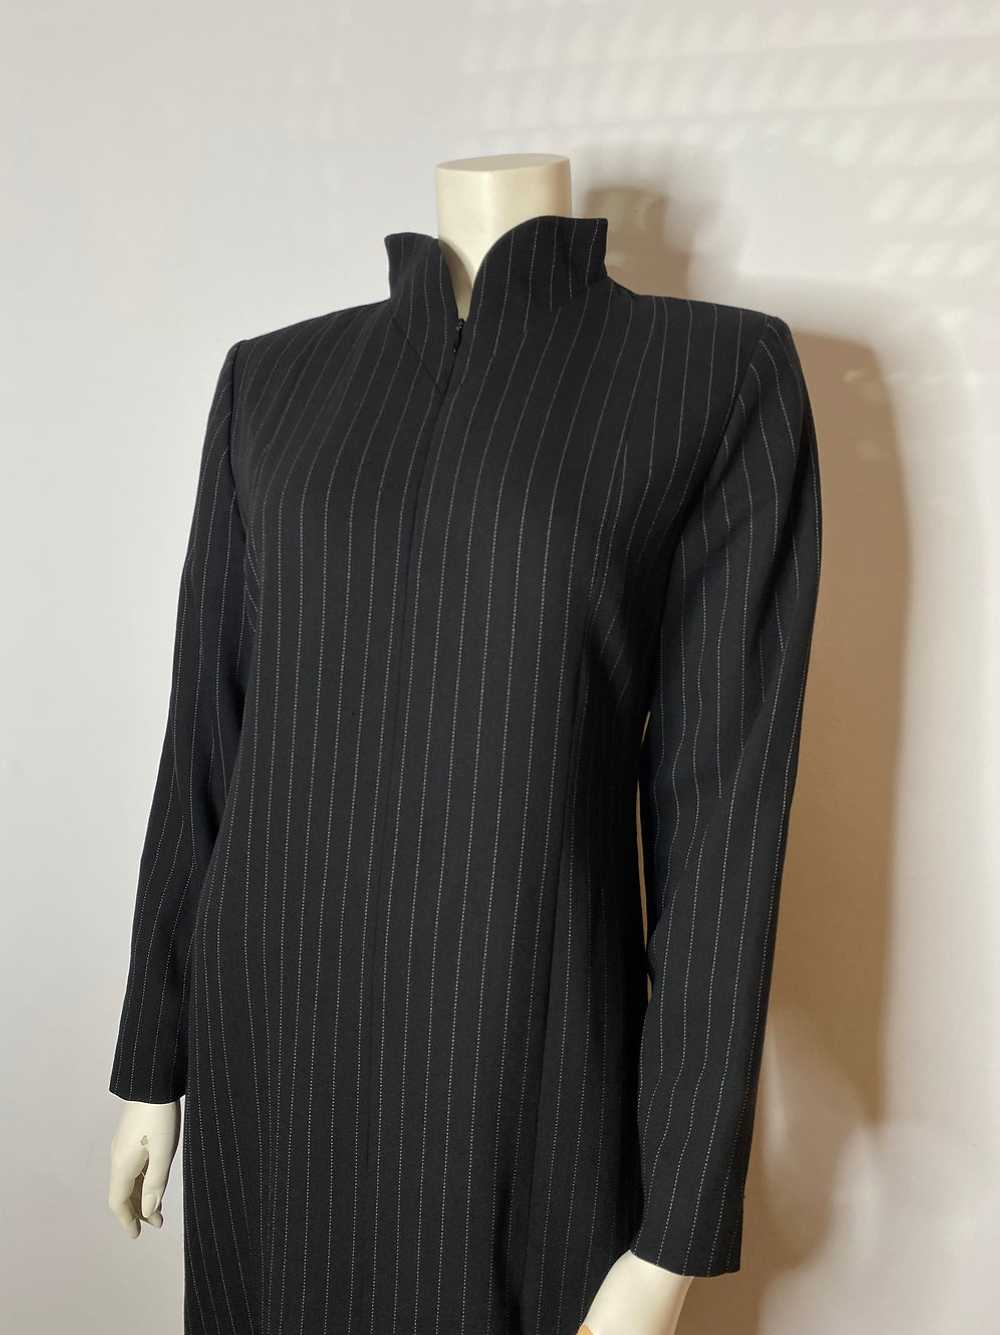 Yves Saint Laurent black striped dress - image 4